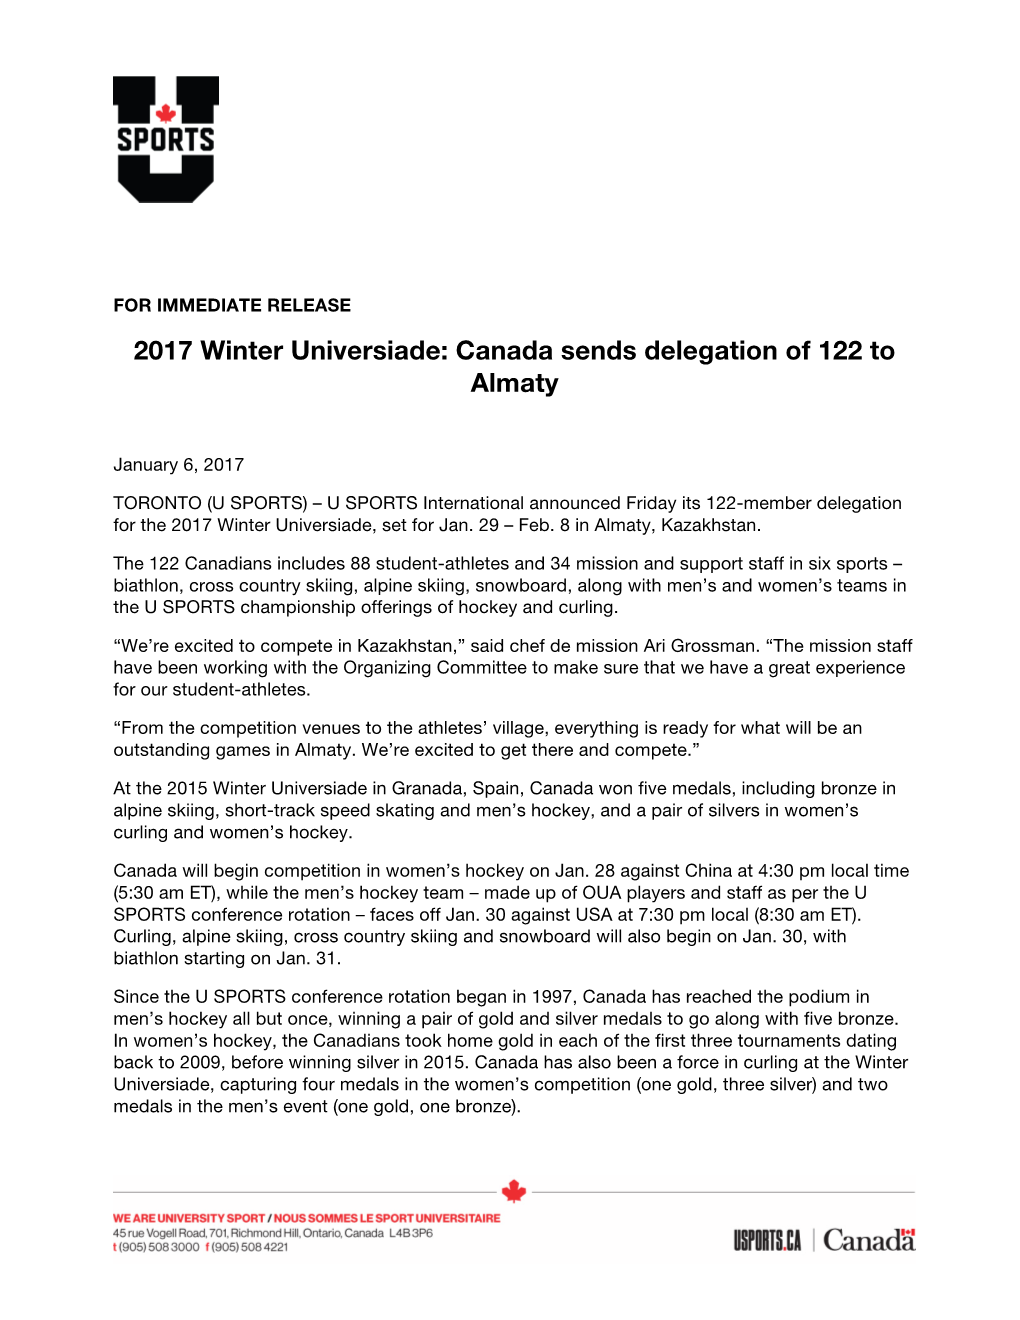 2017 Winter Universiade: Canada Sends Delegation of 122 to Almaty